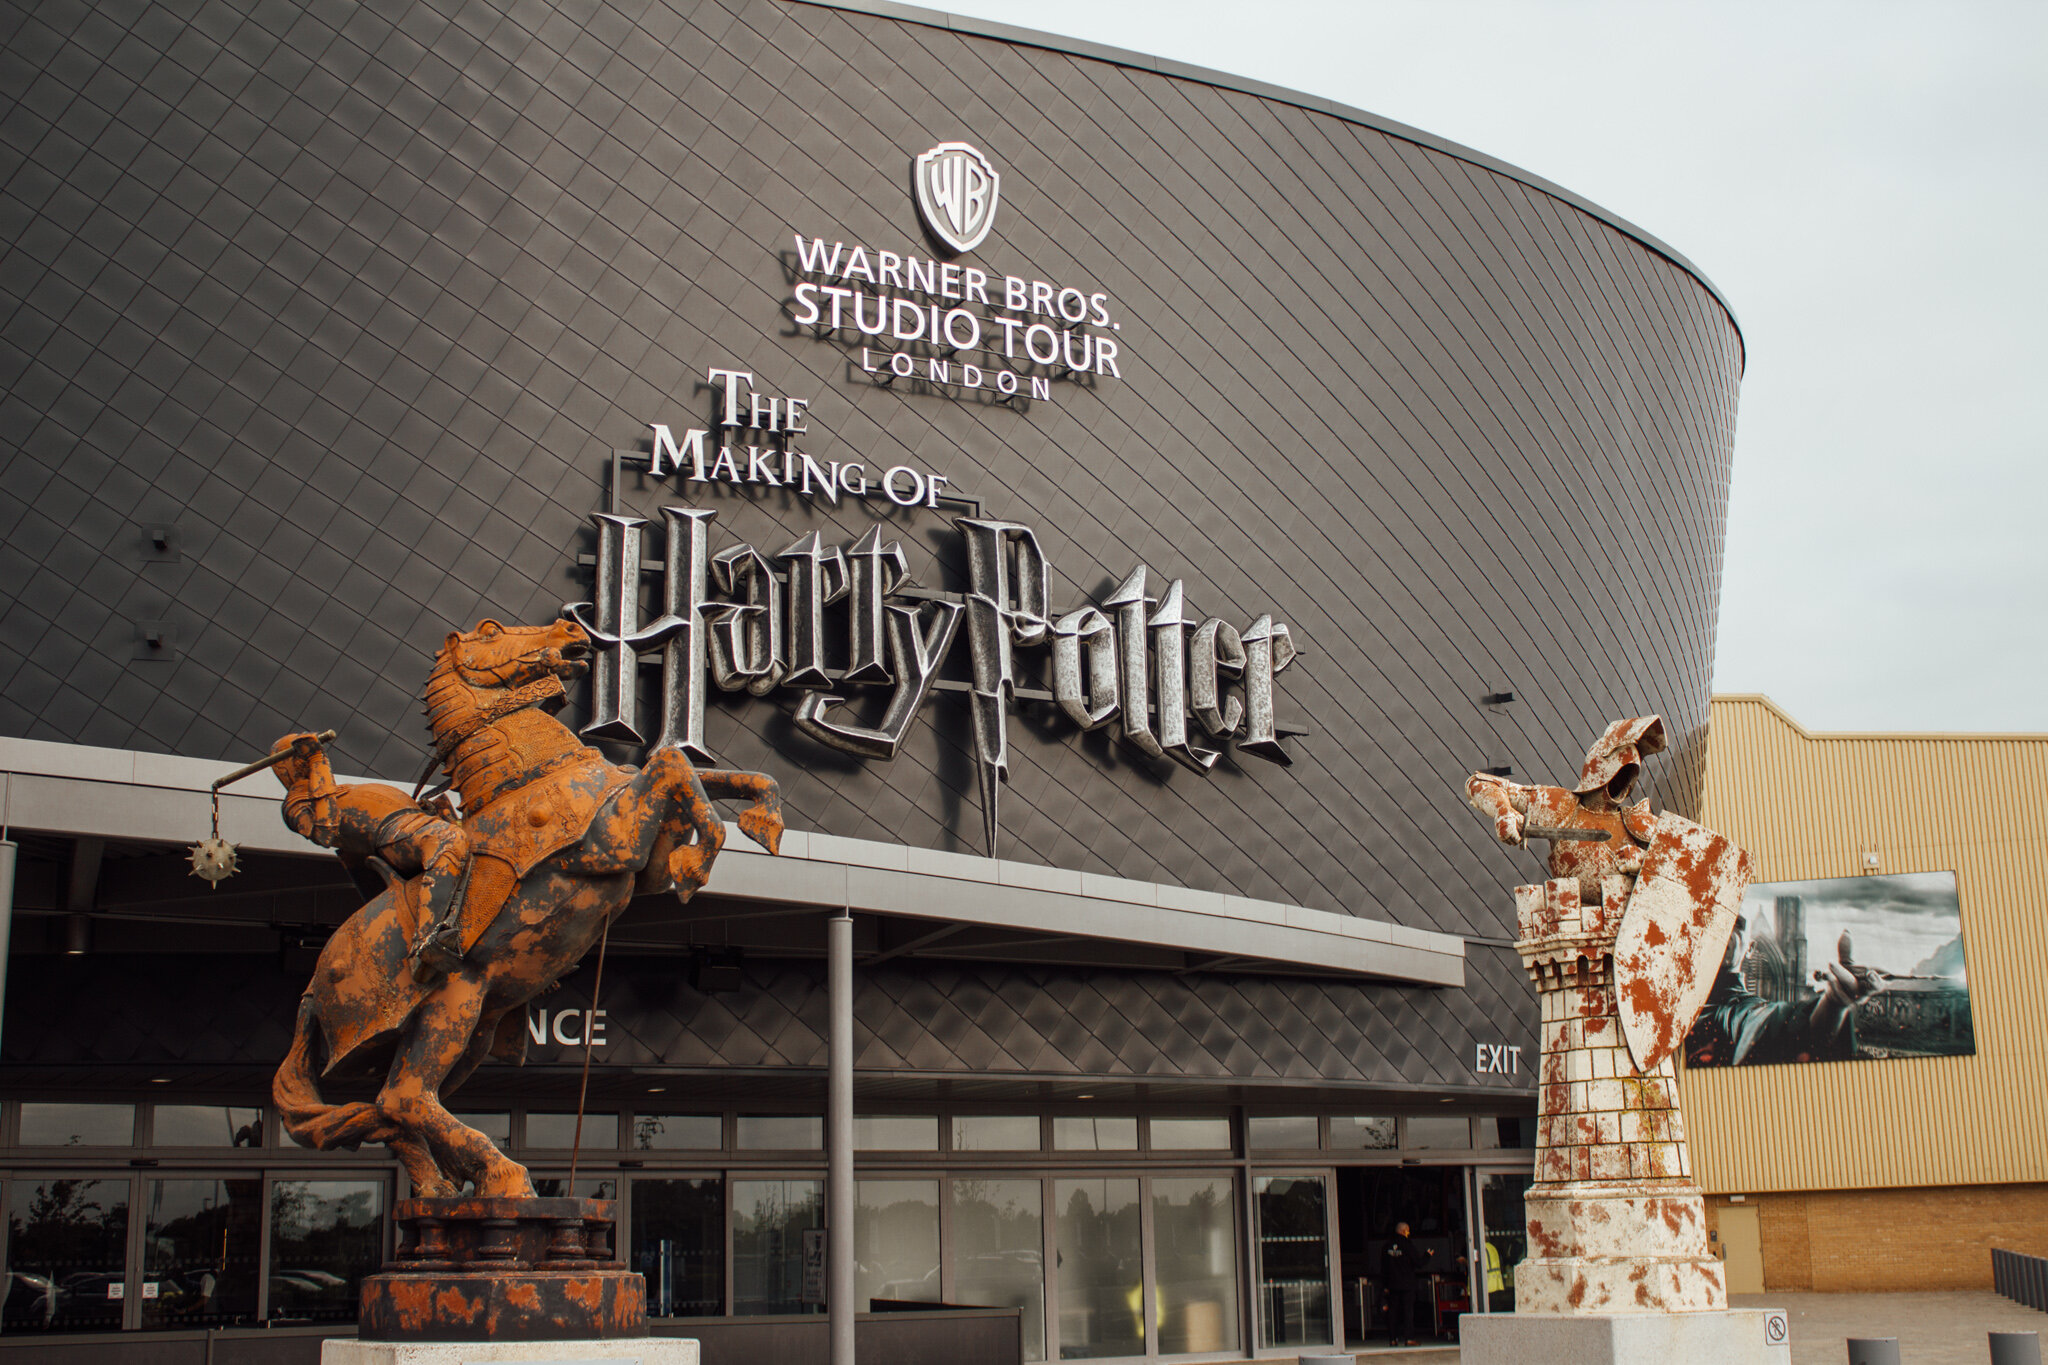 Harry Potter Studio London